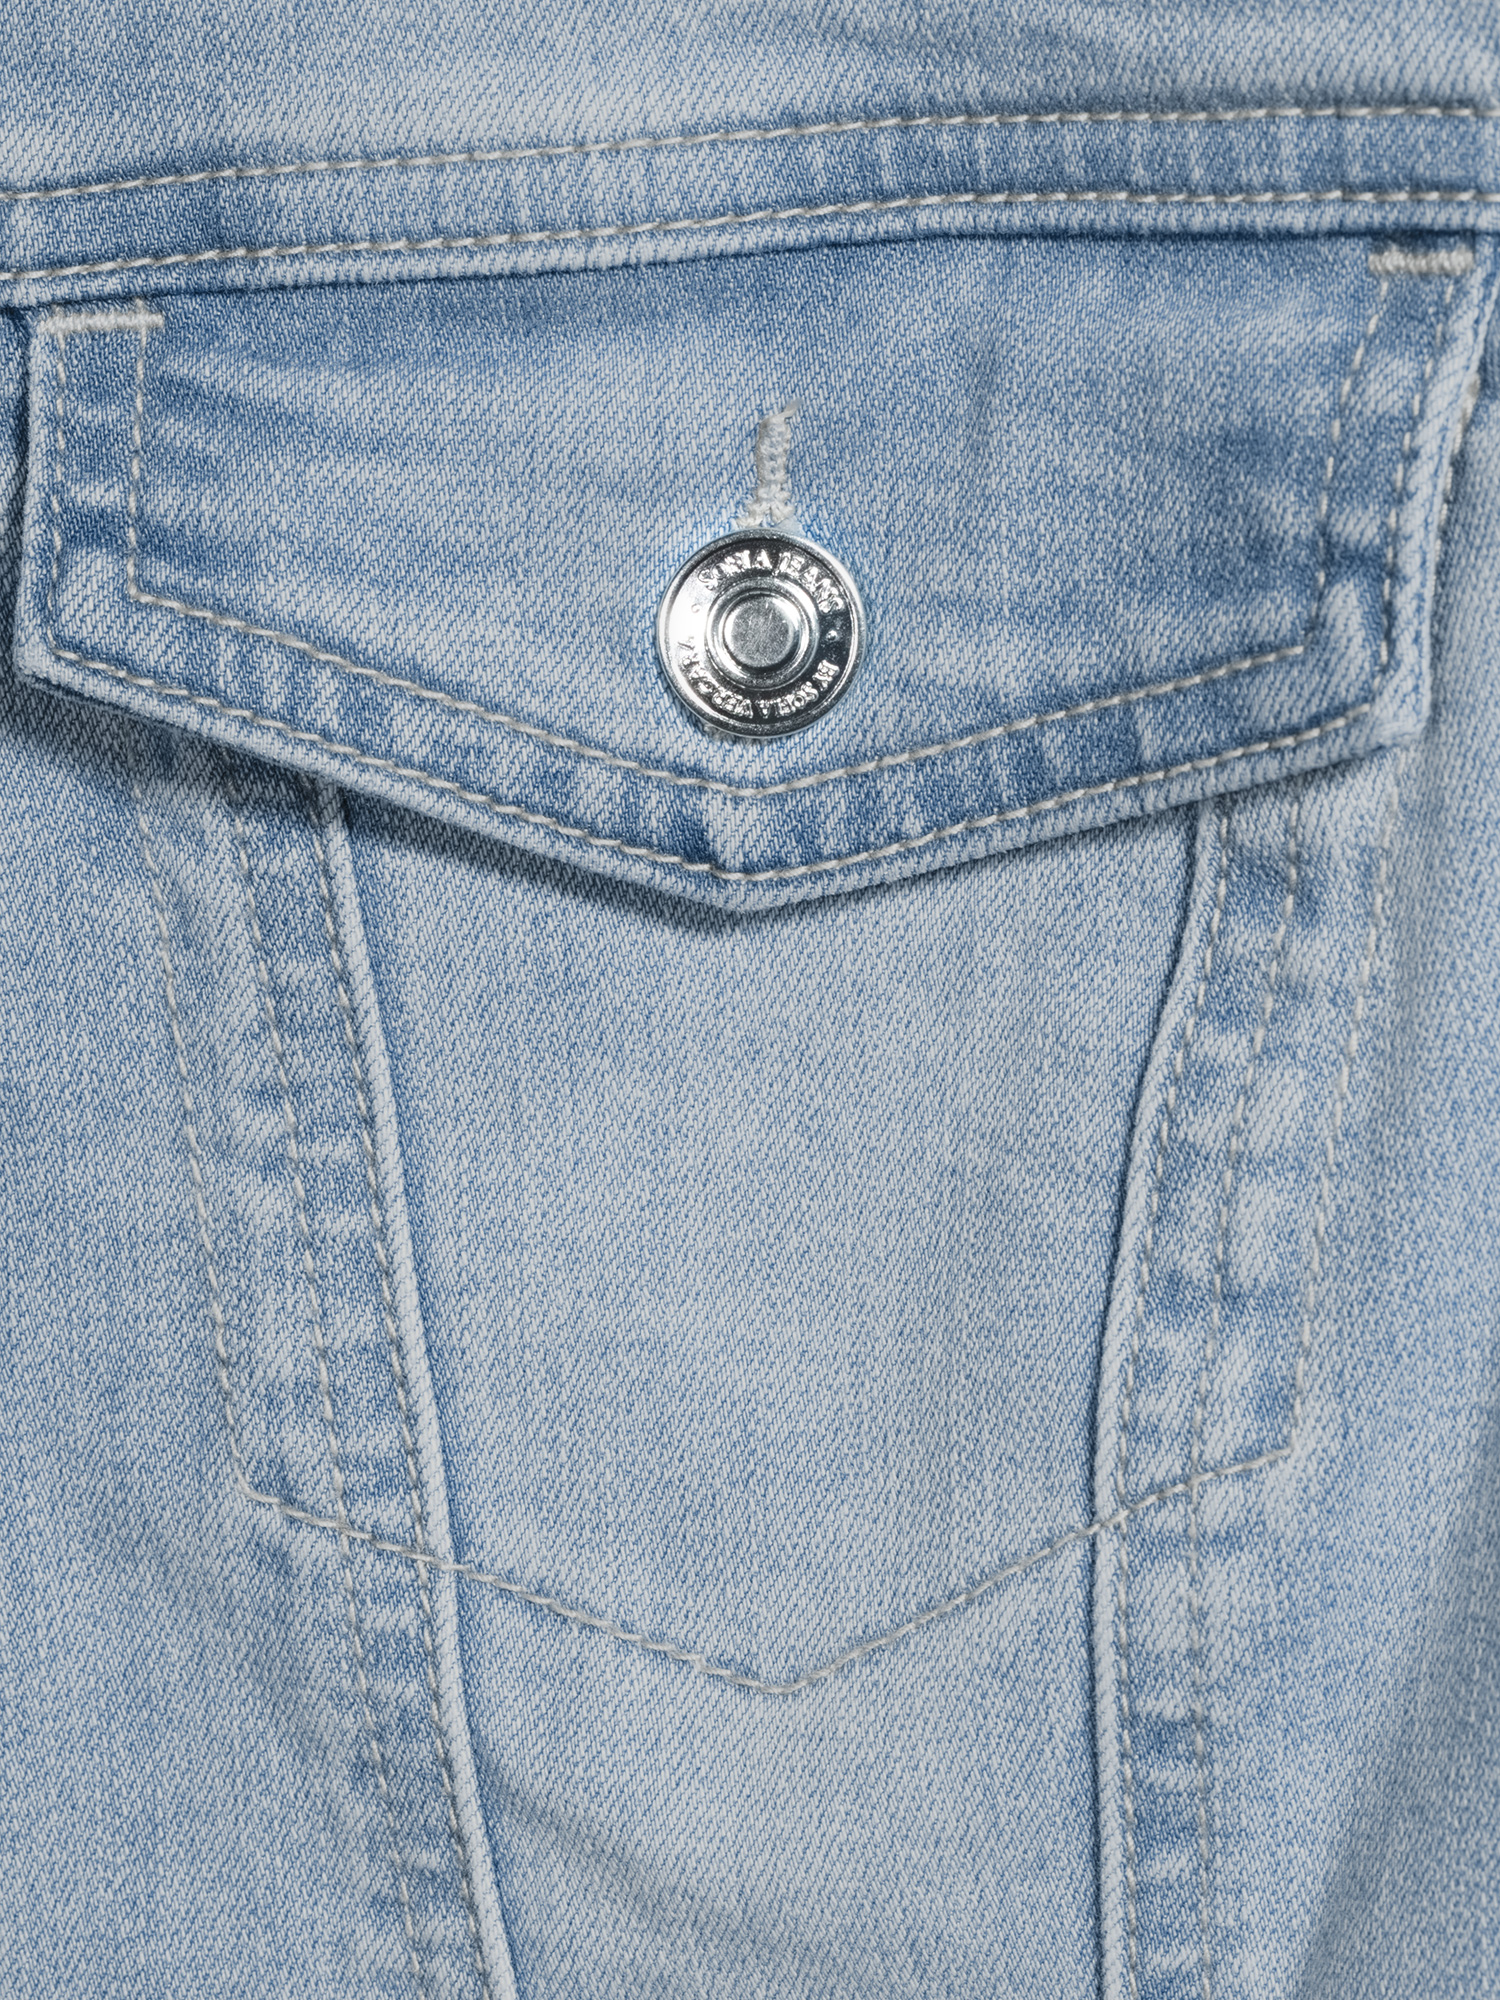 Sofia Jeans by Sofia Vergara Marianella Wrist Button Jean Jacket, Women's - image 3 of 9